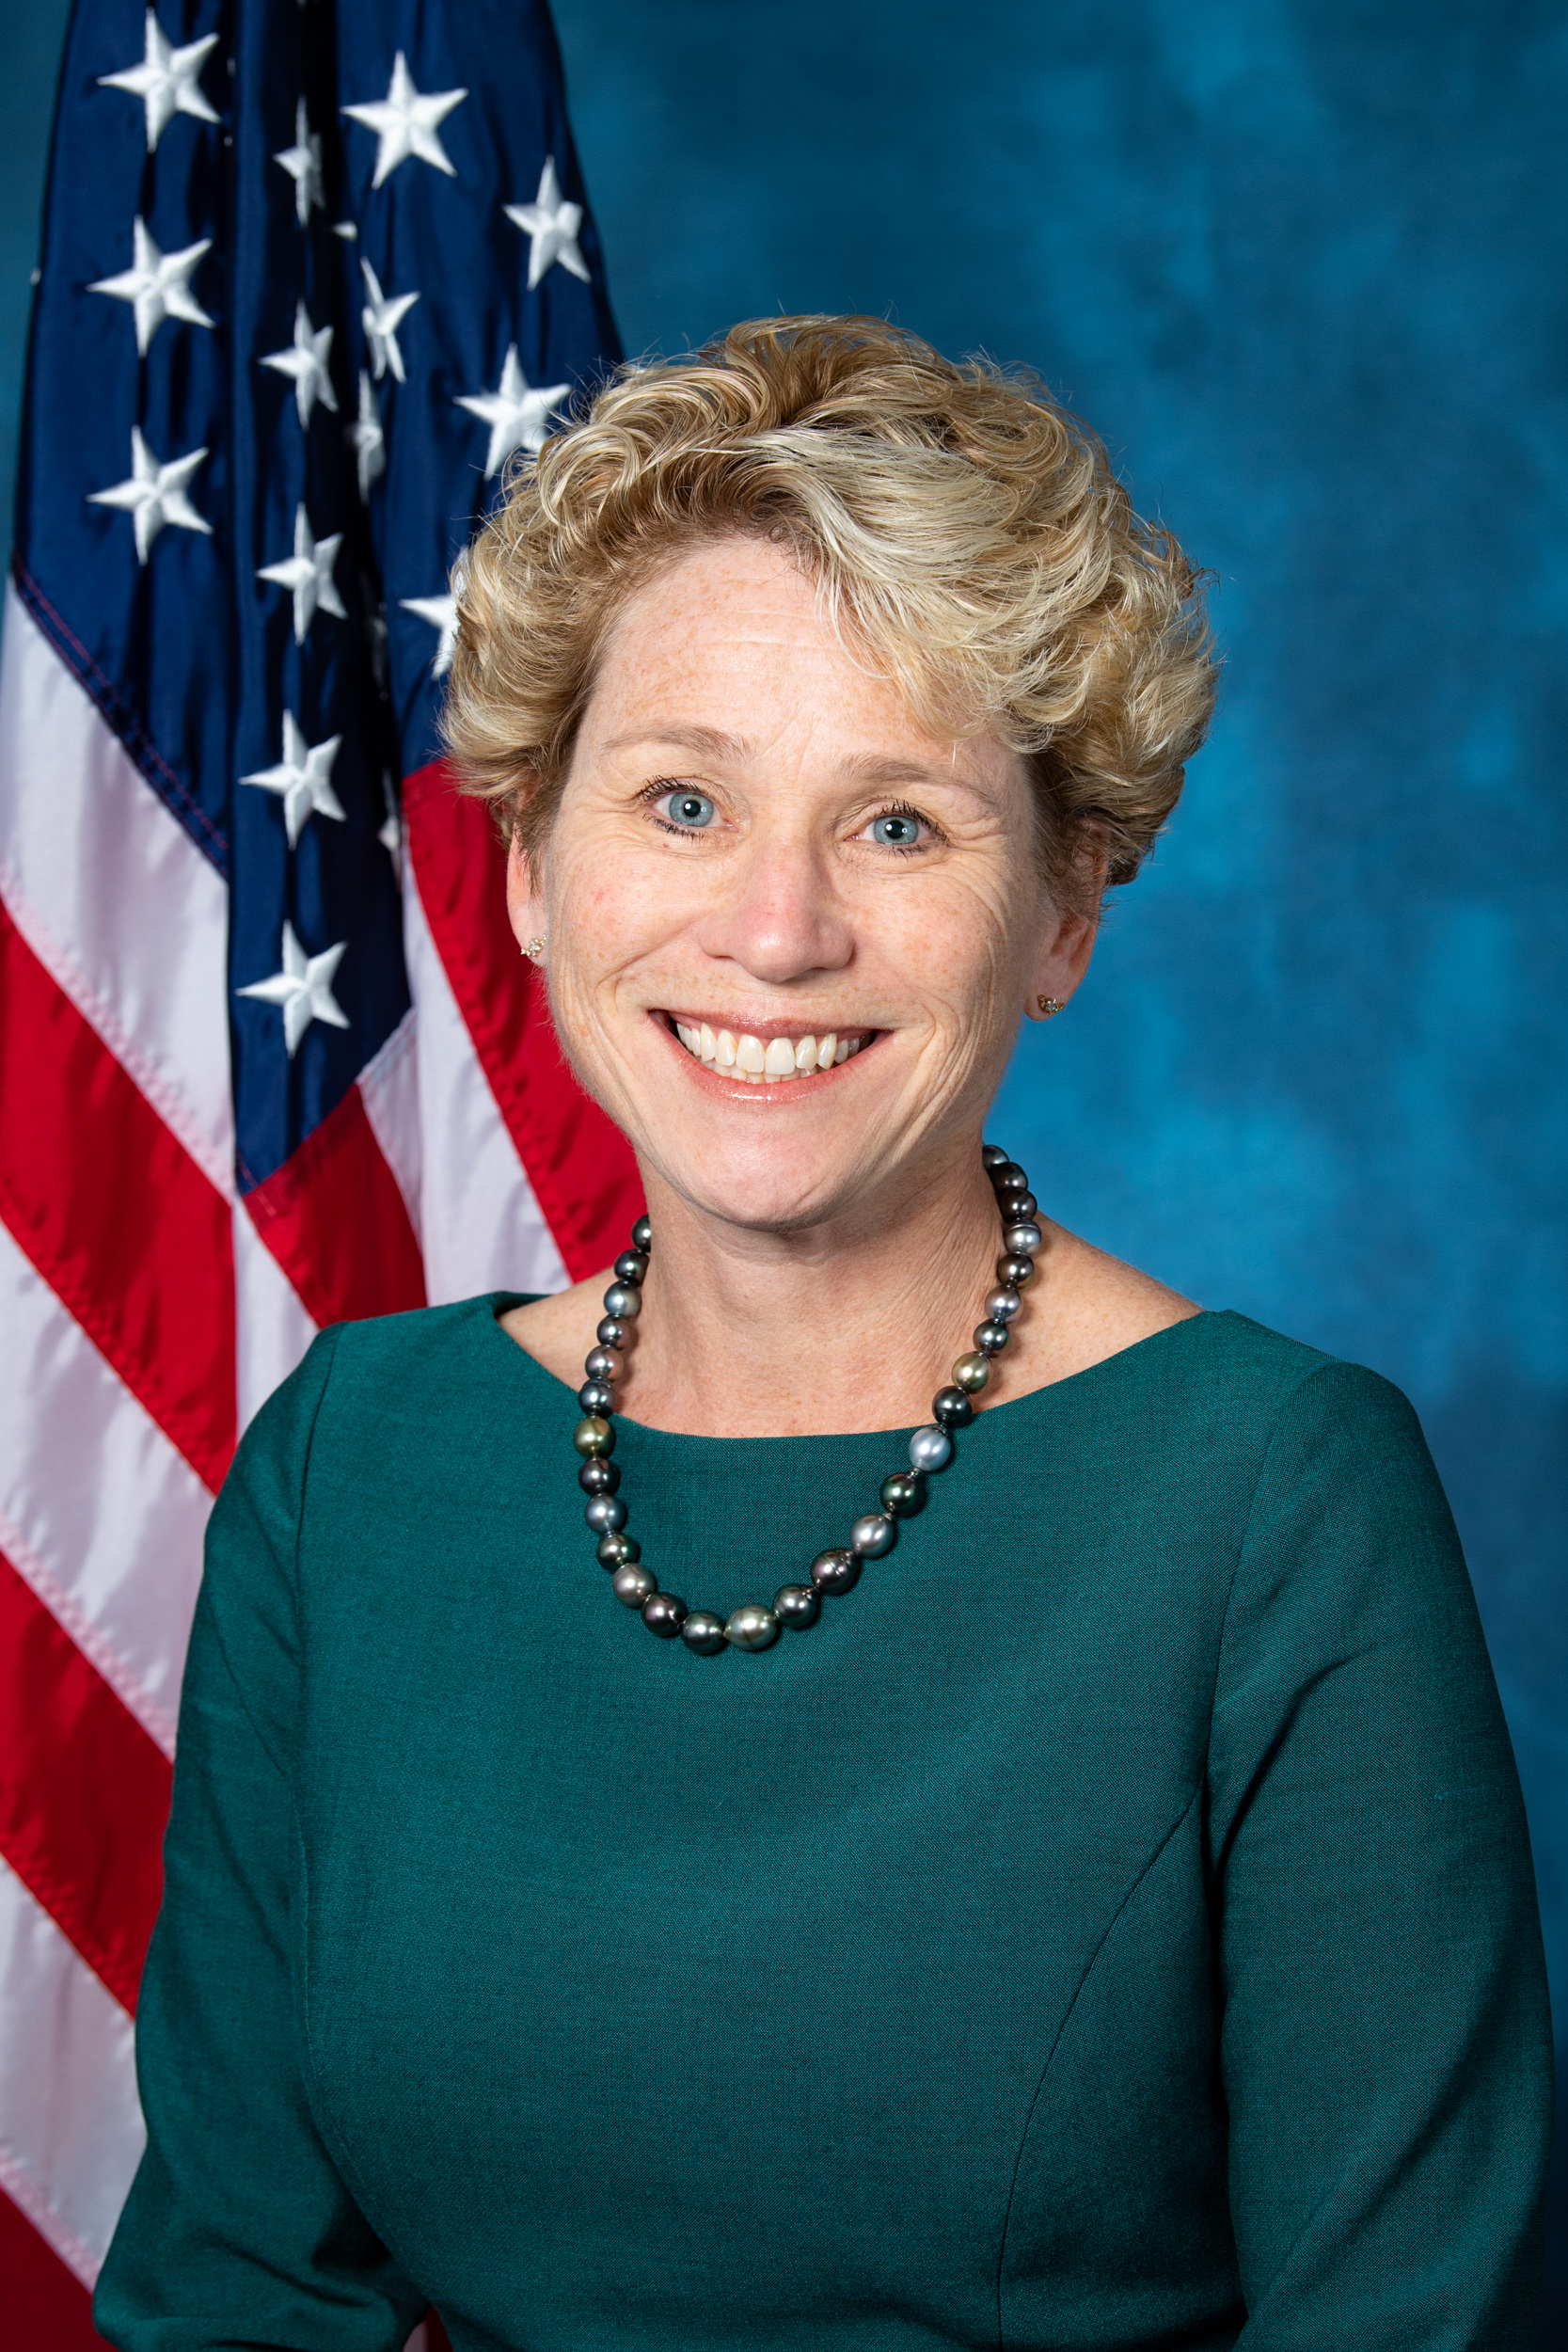 Congresswoman Chrissy Houlahan